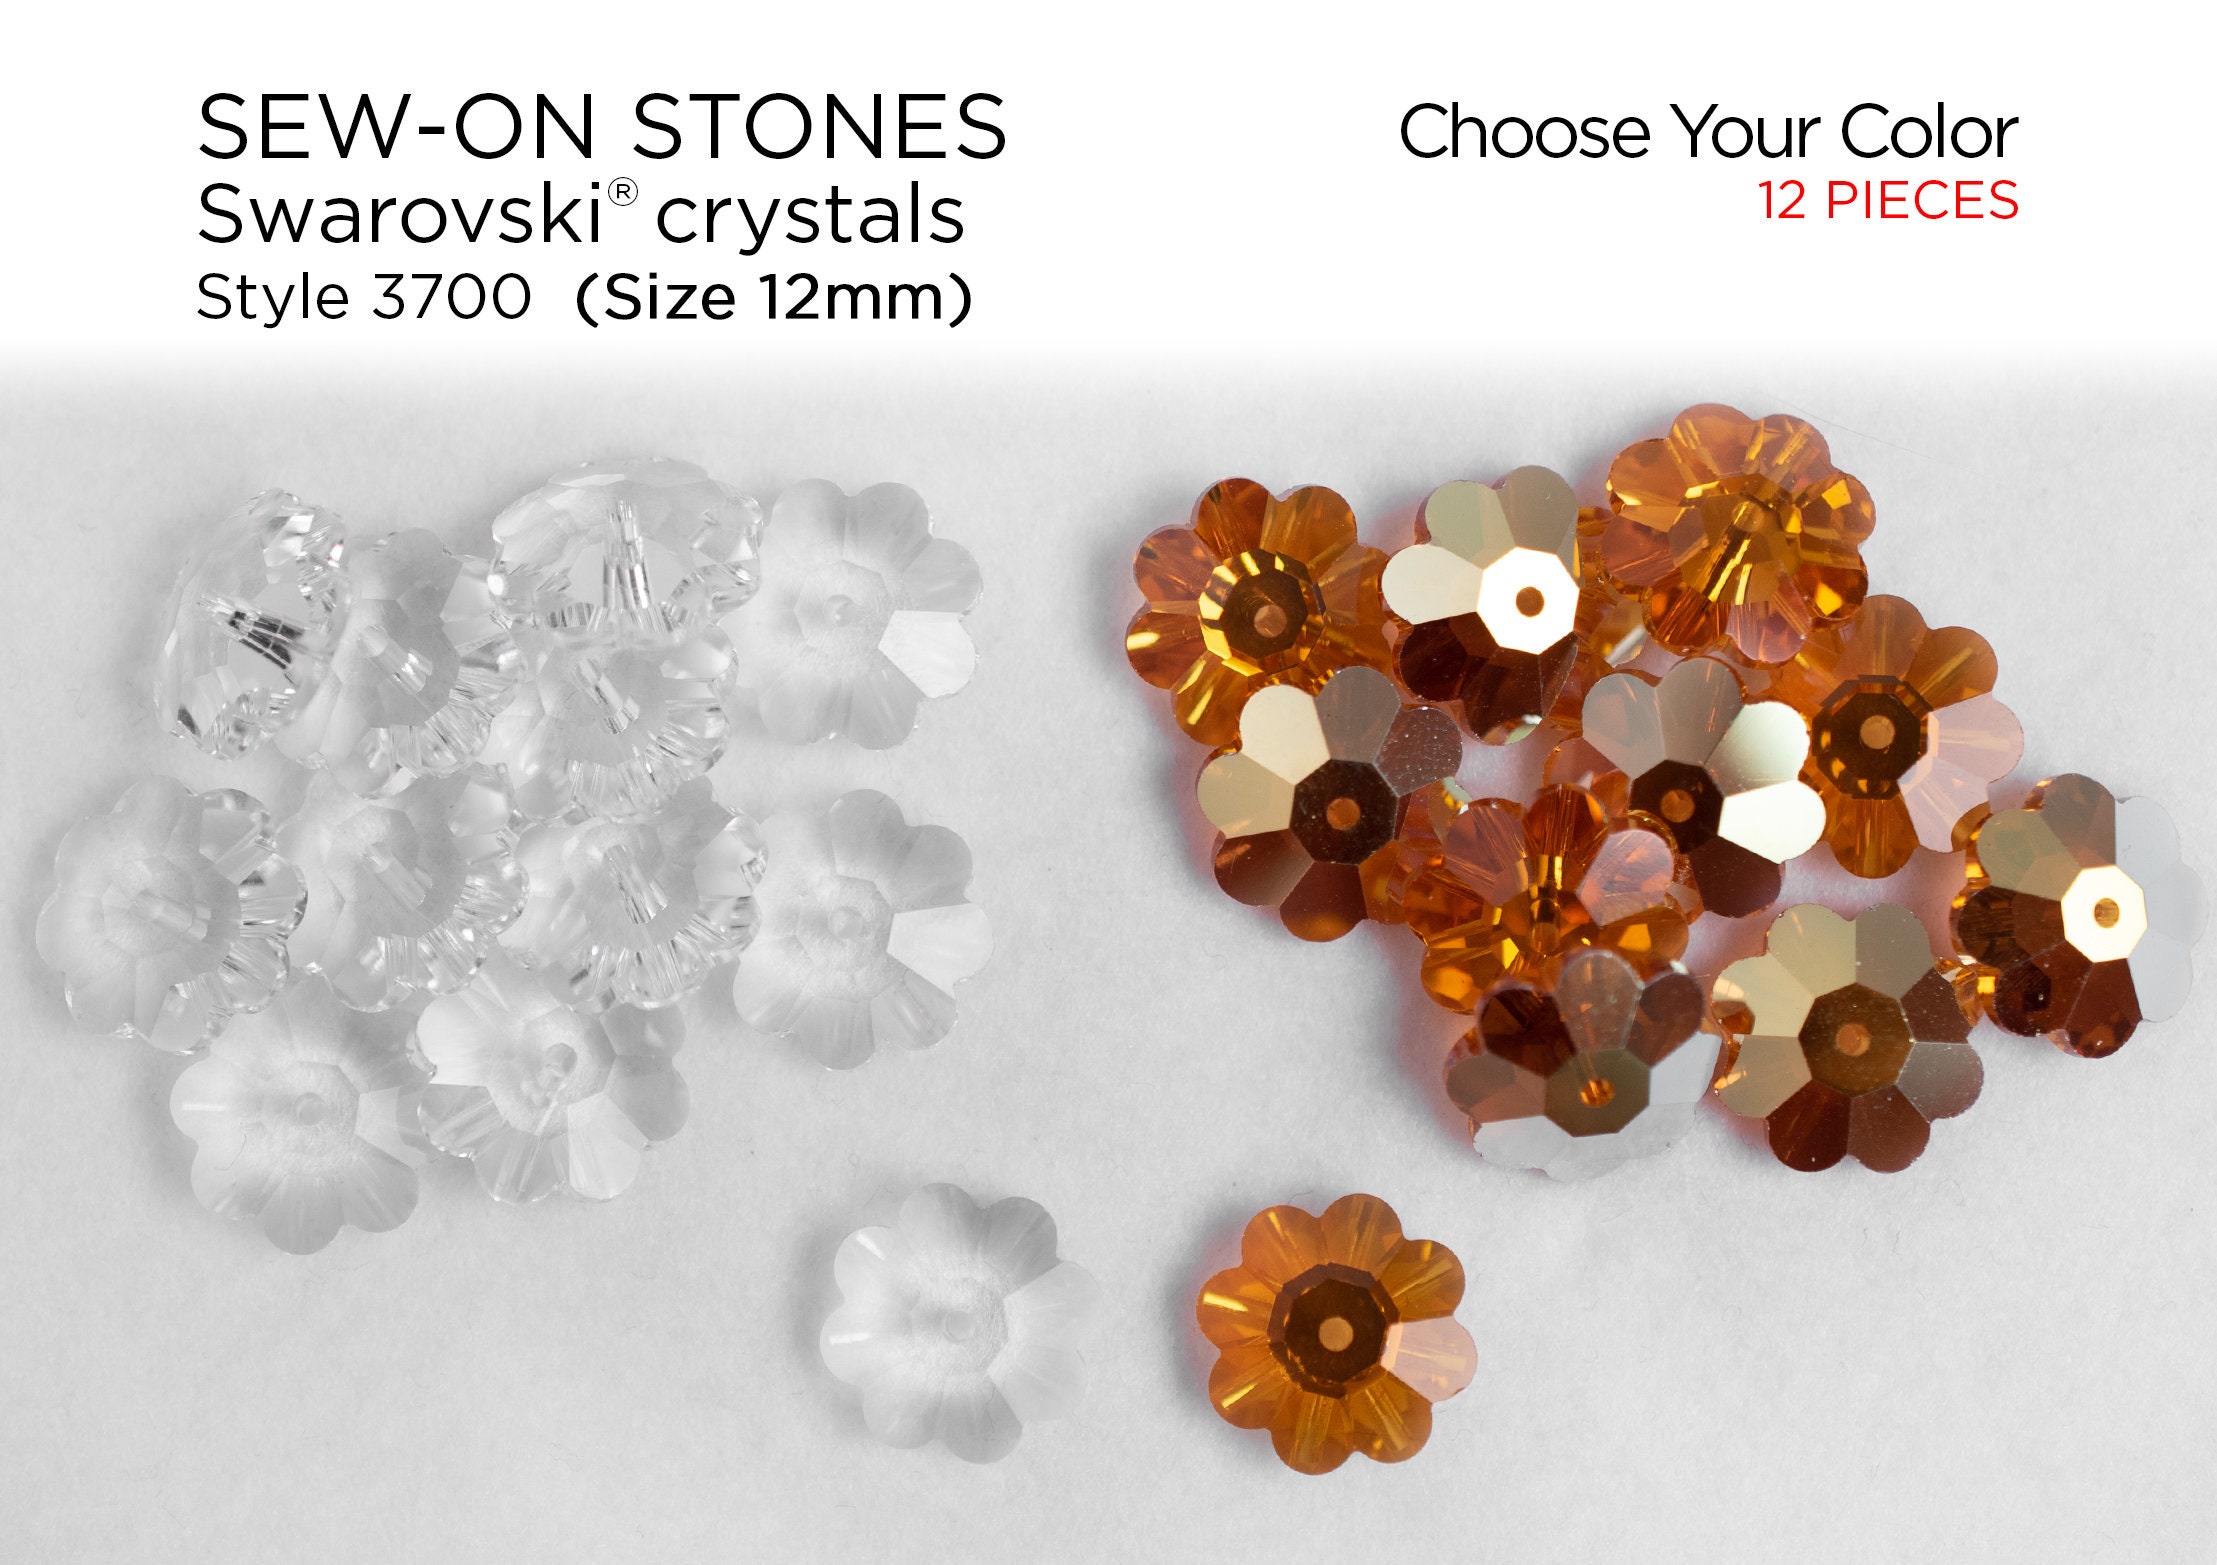 200 Pieces Sew on Rhinestone, Crystals Acrylic Gems Rhinestone Metal Prong  Setting Flatback Multi-Colors Mixed Shapes Sewing Rhinestones for DIY